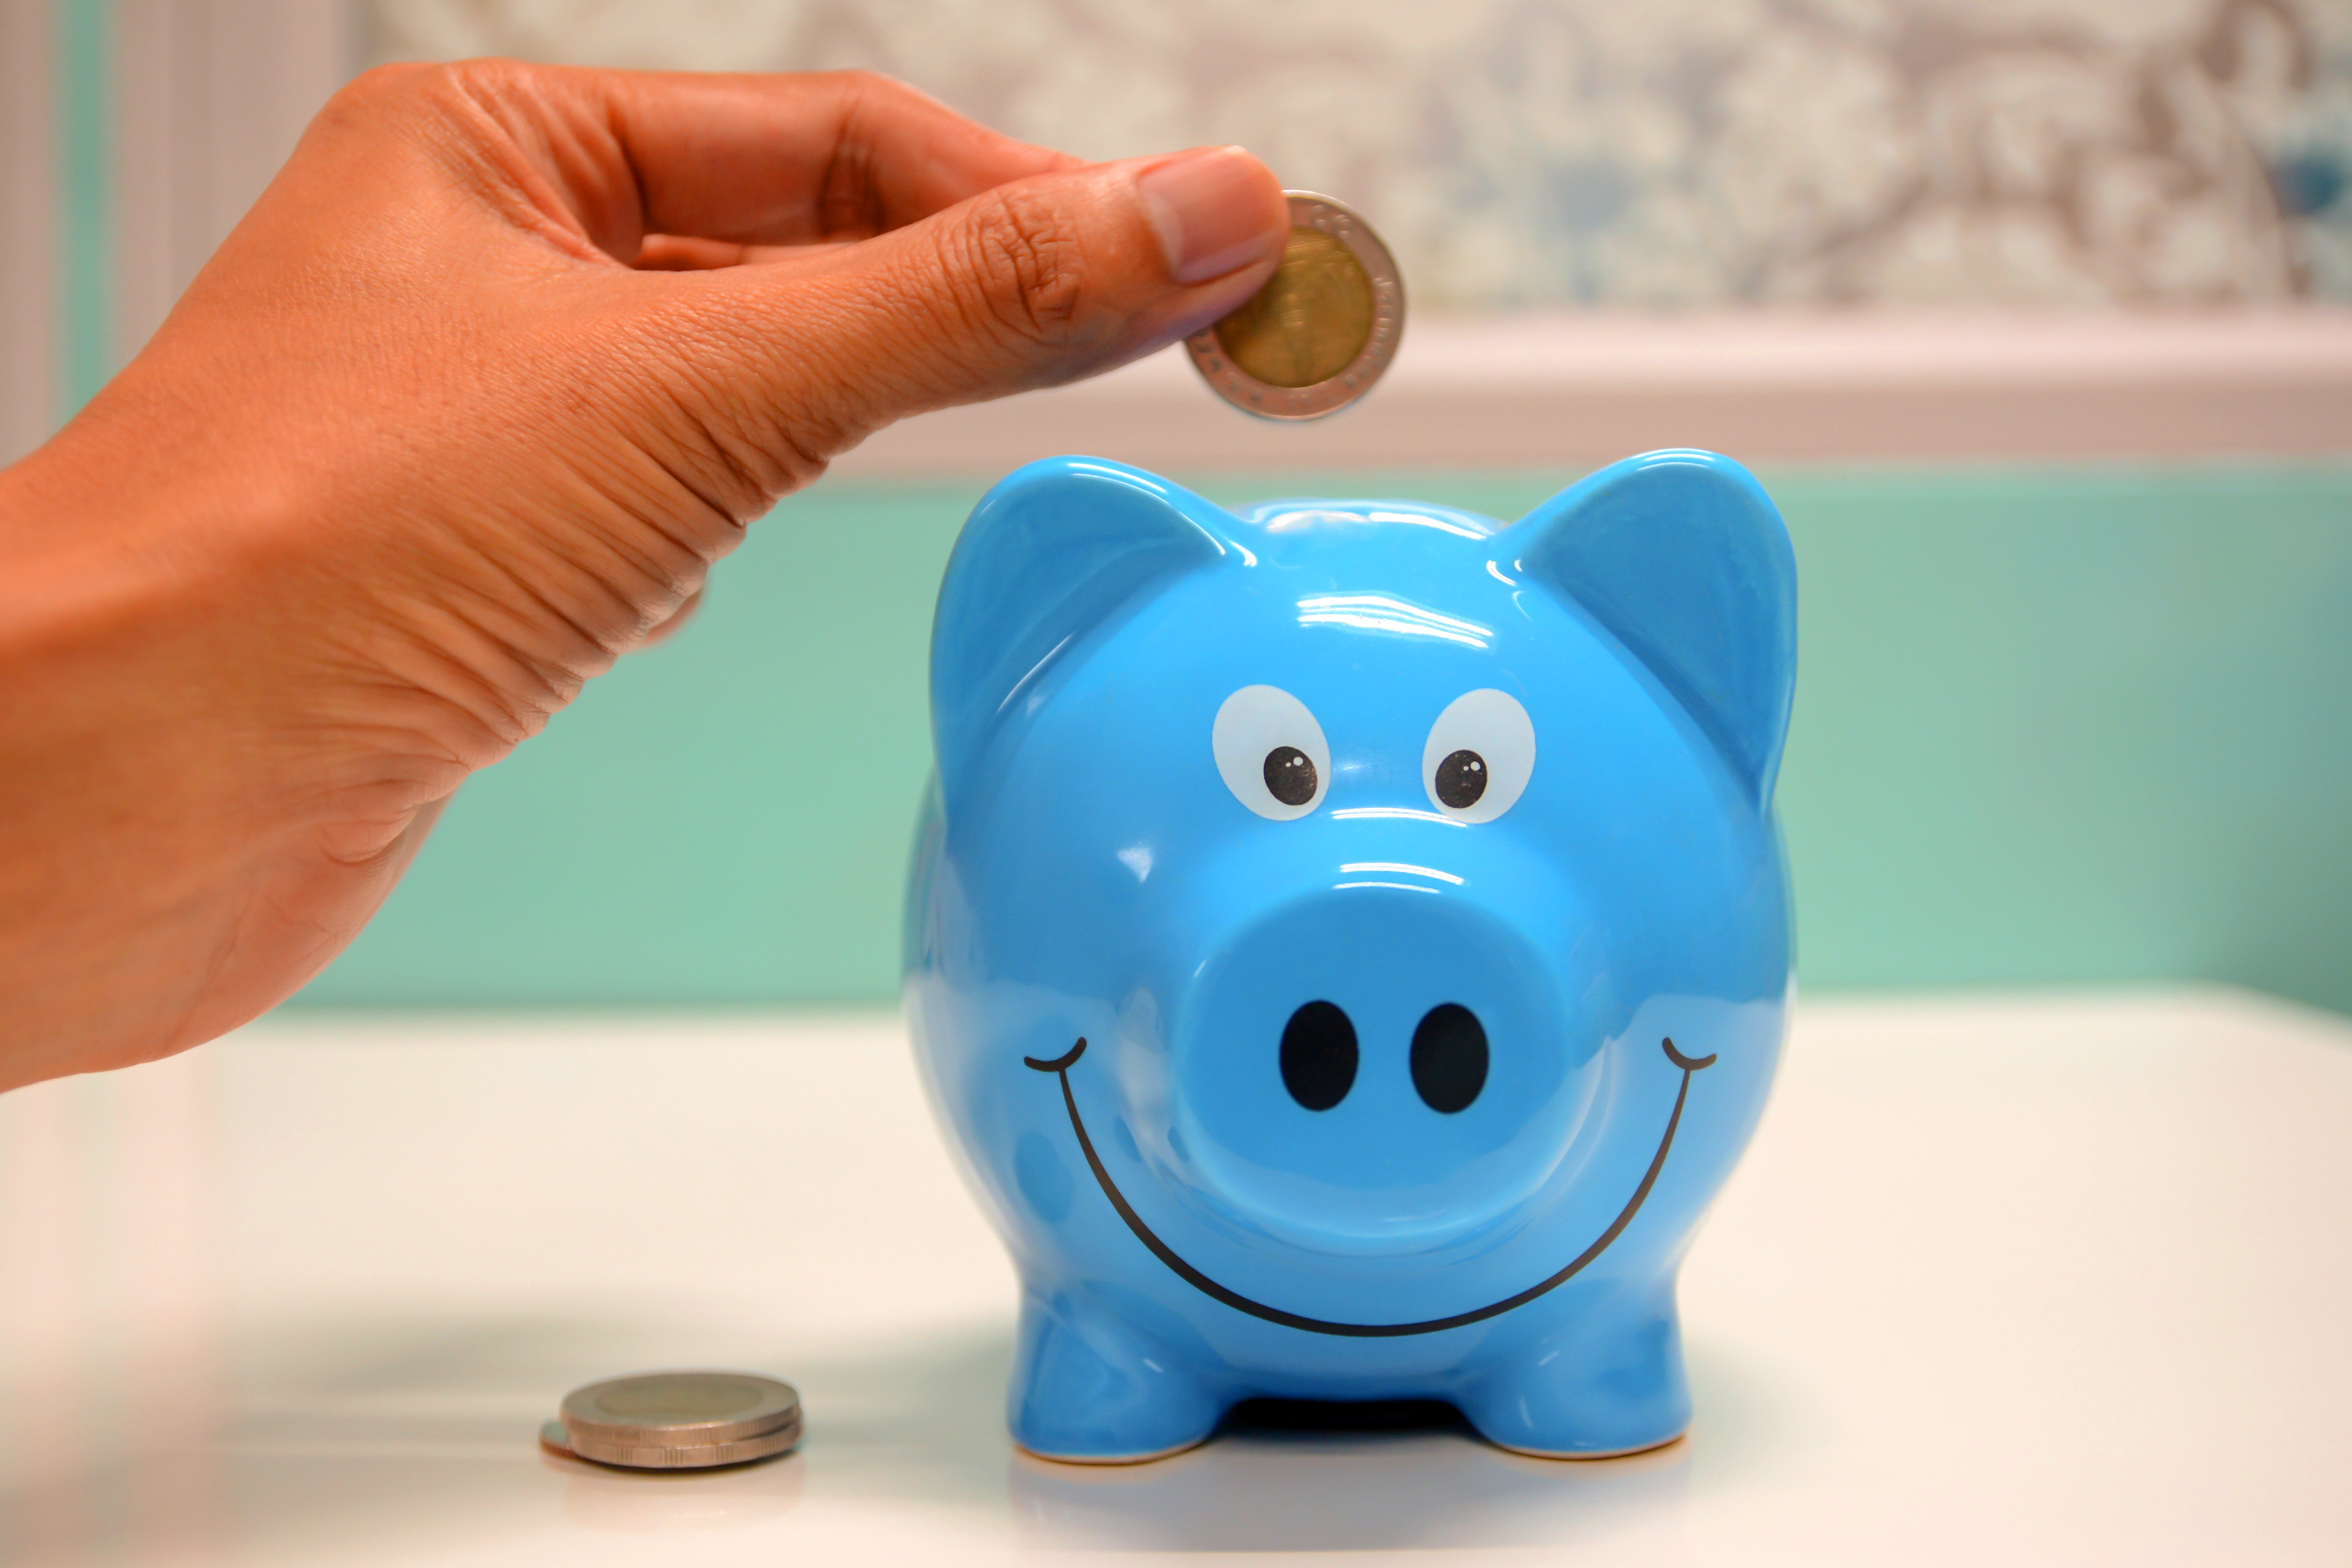 An individual putting money into a piggy bank. | Source: Pexels